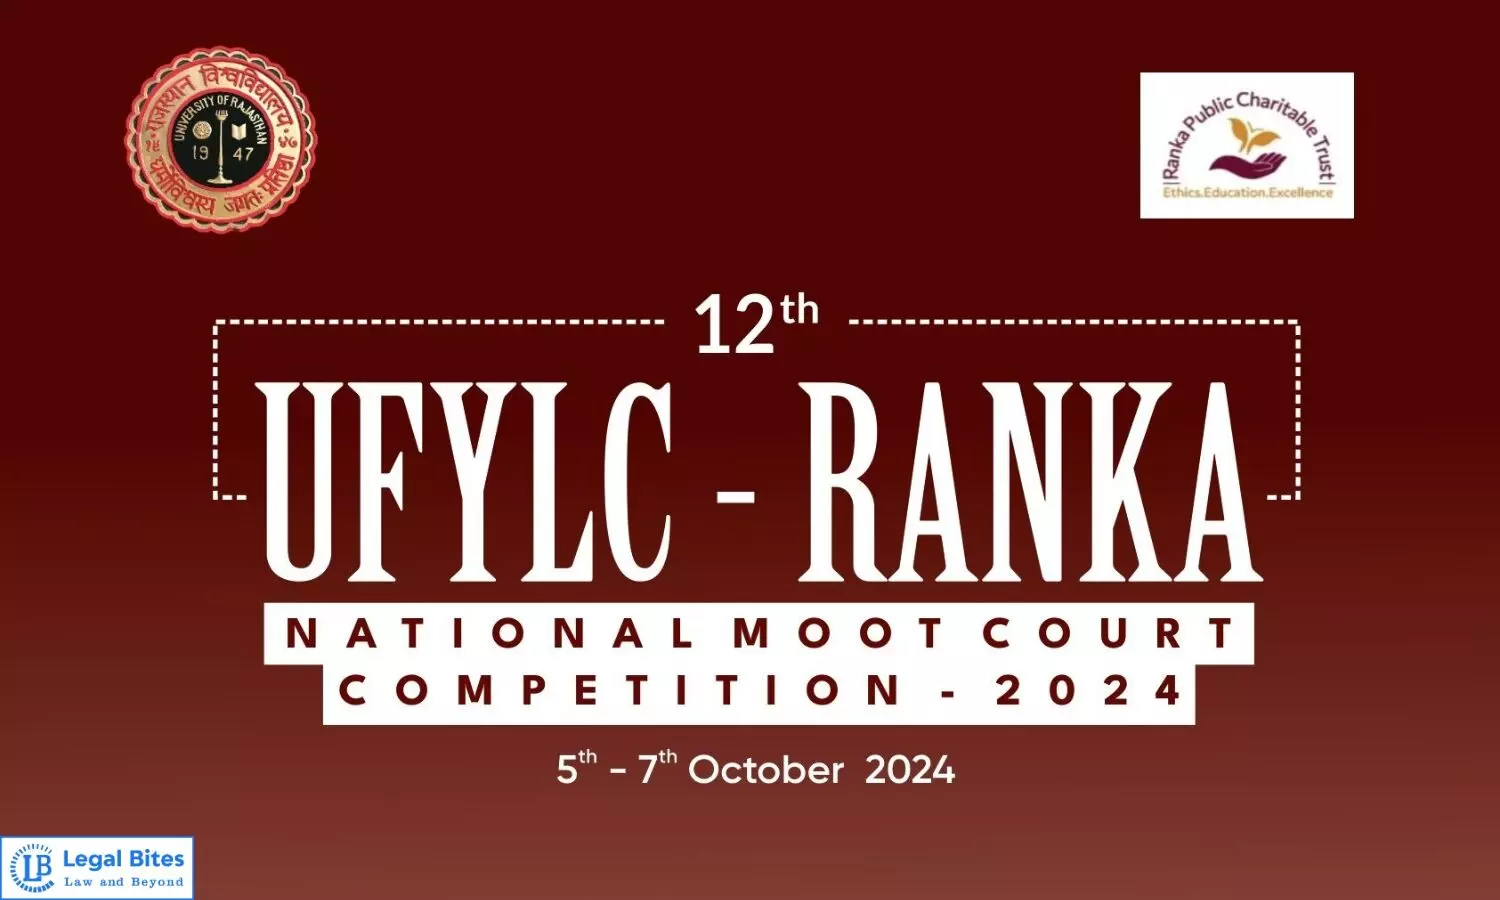 12th UFYLC - RANKA National Moot Court Competition 2024